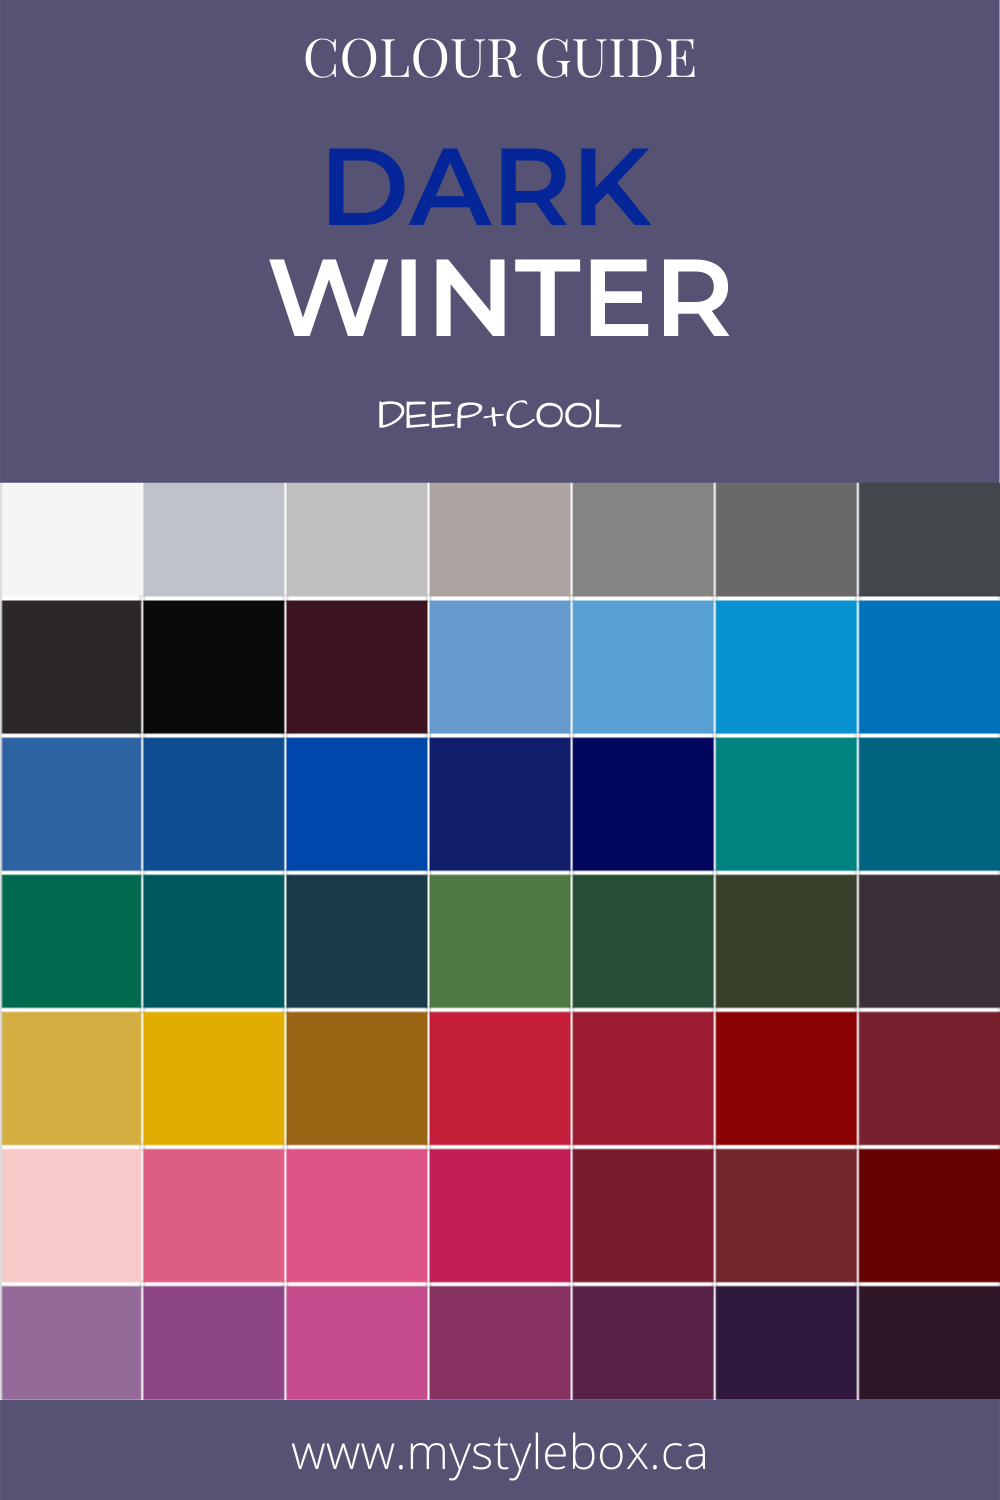 Dark (Deep) Winter Seasonal Color Guide